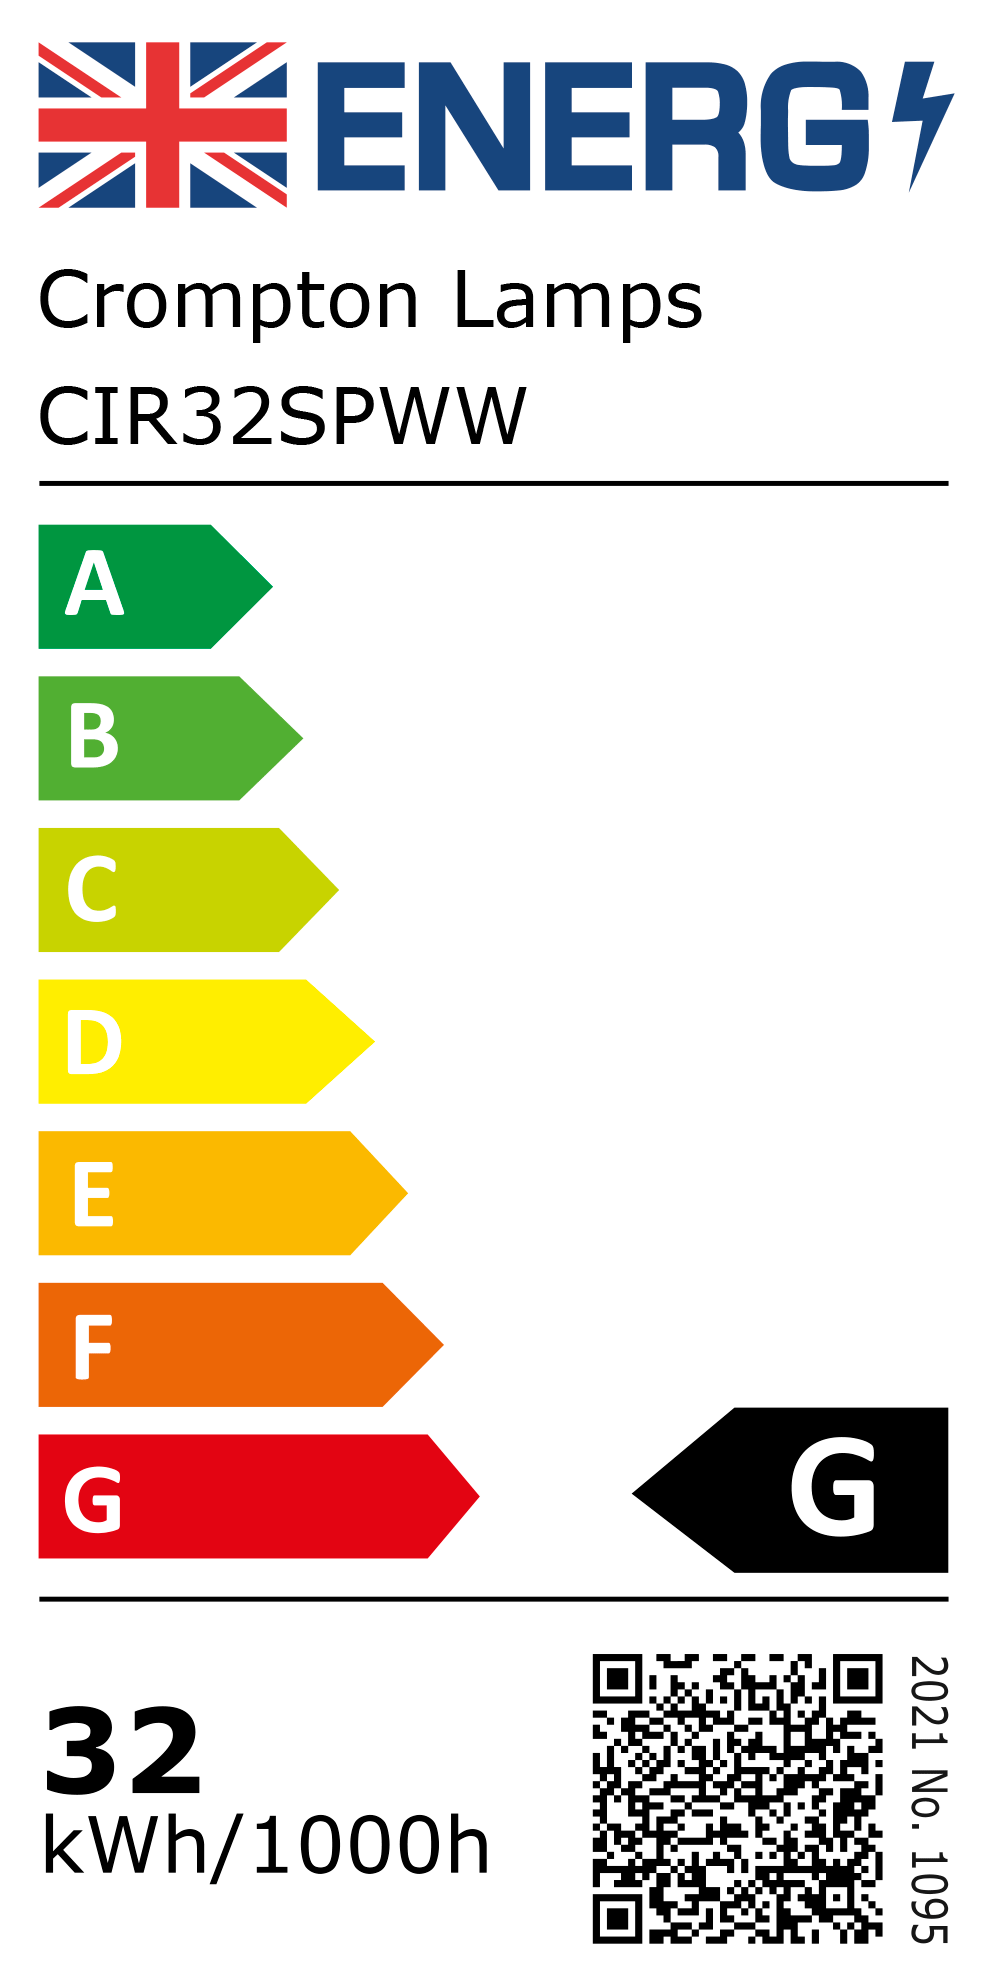 New 2021 Energy Rating Label: MPN CIR32SPWW